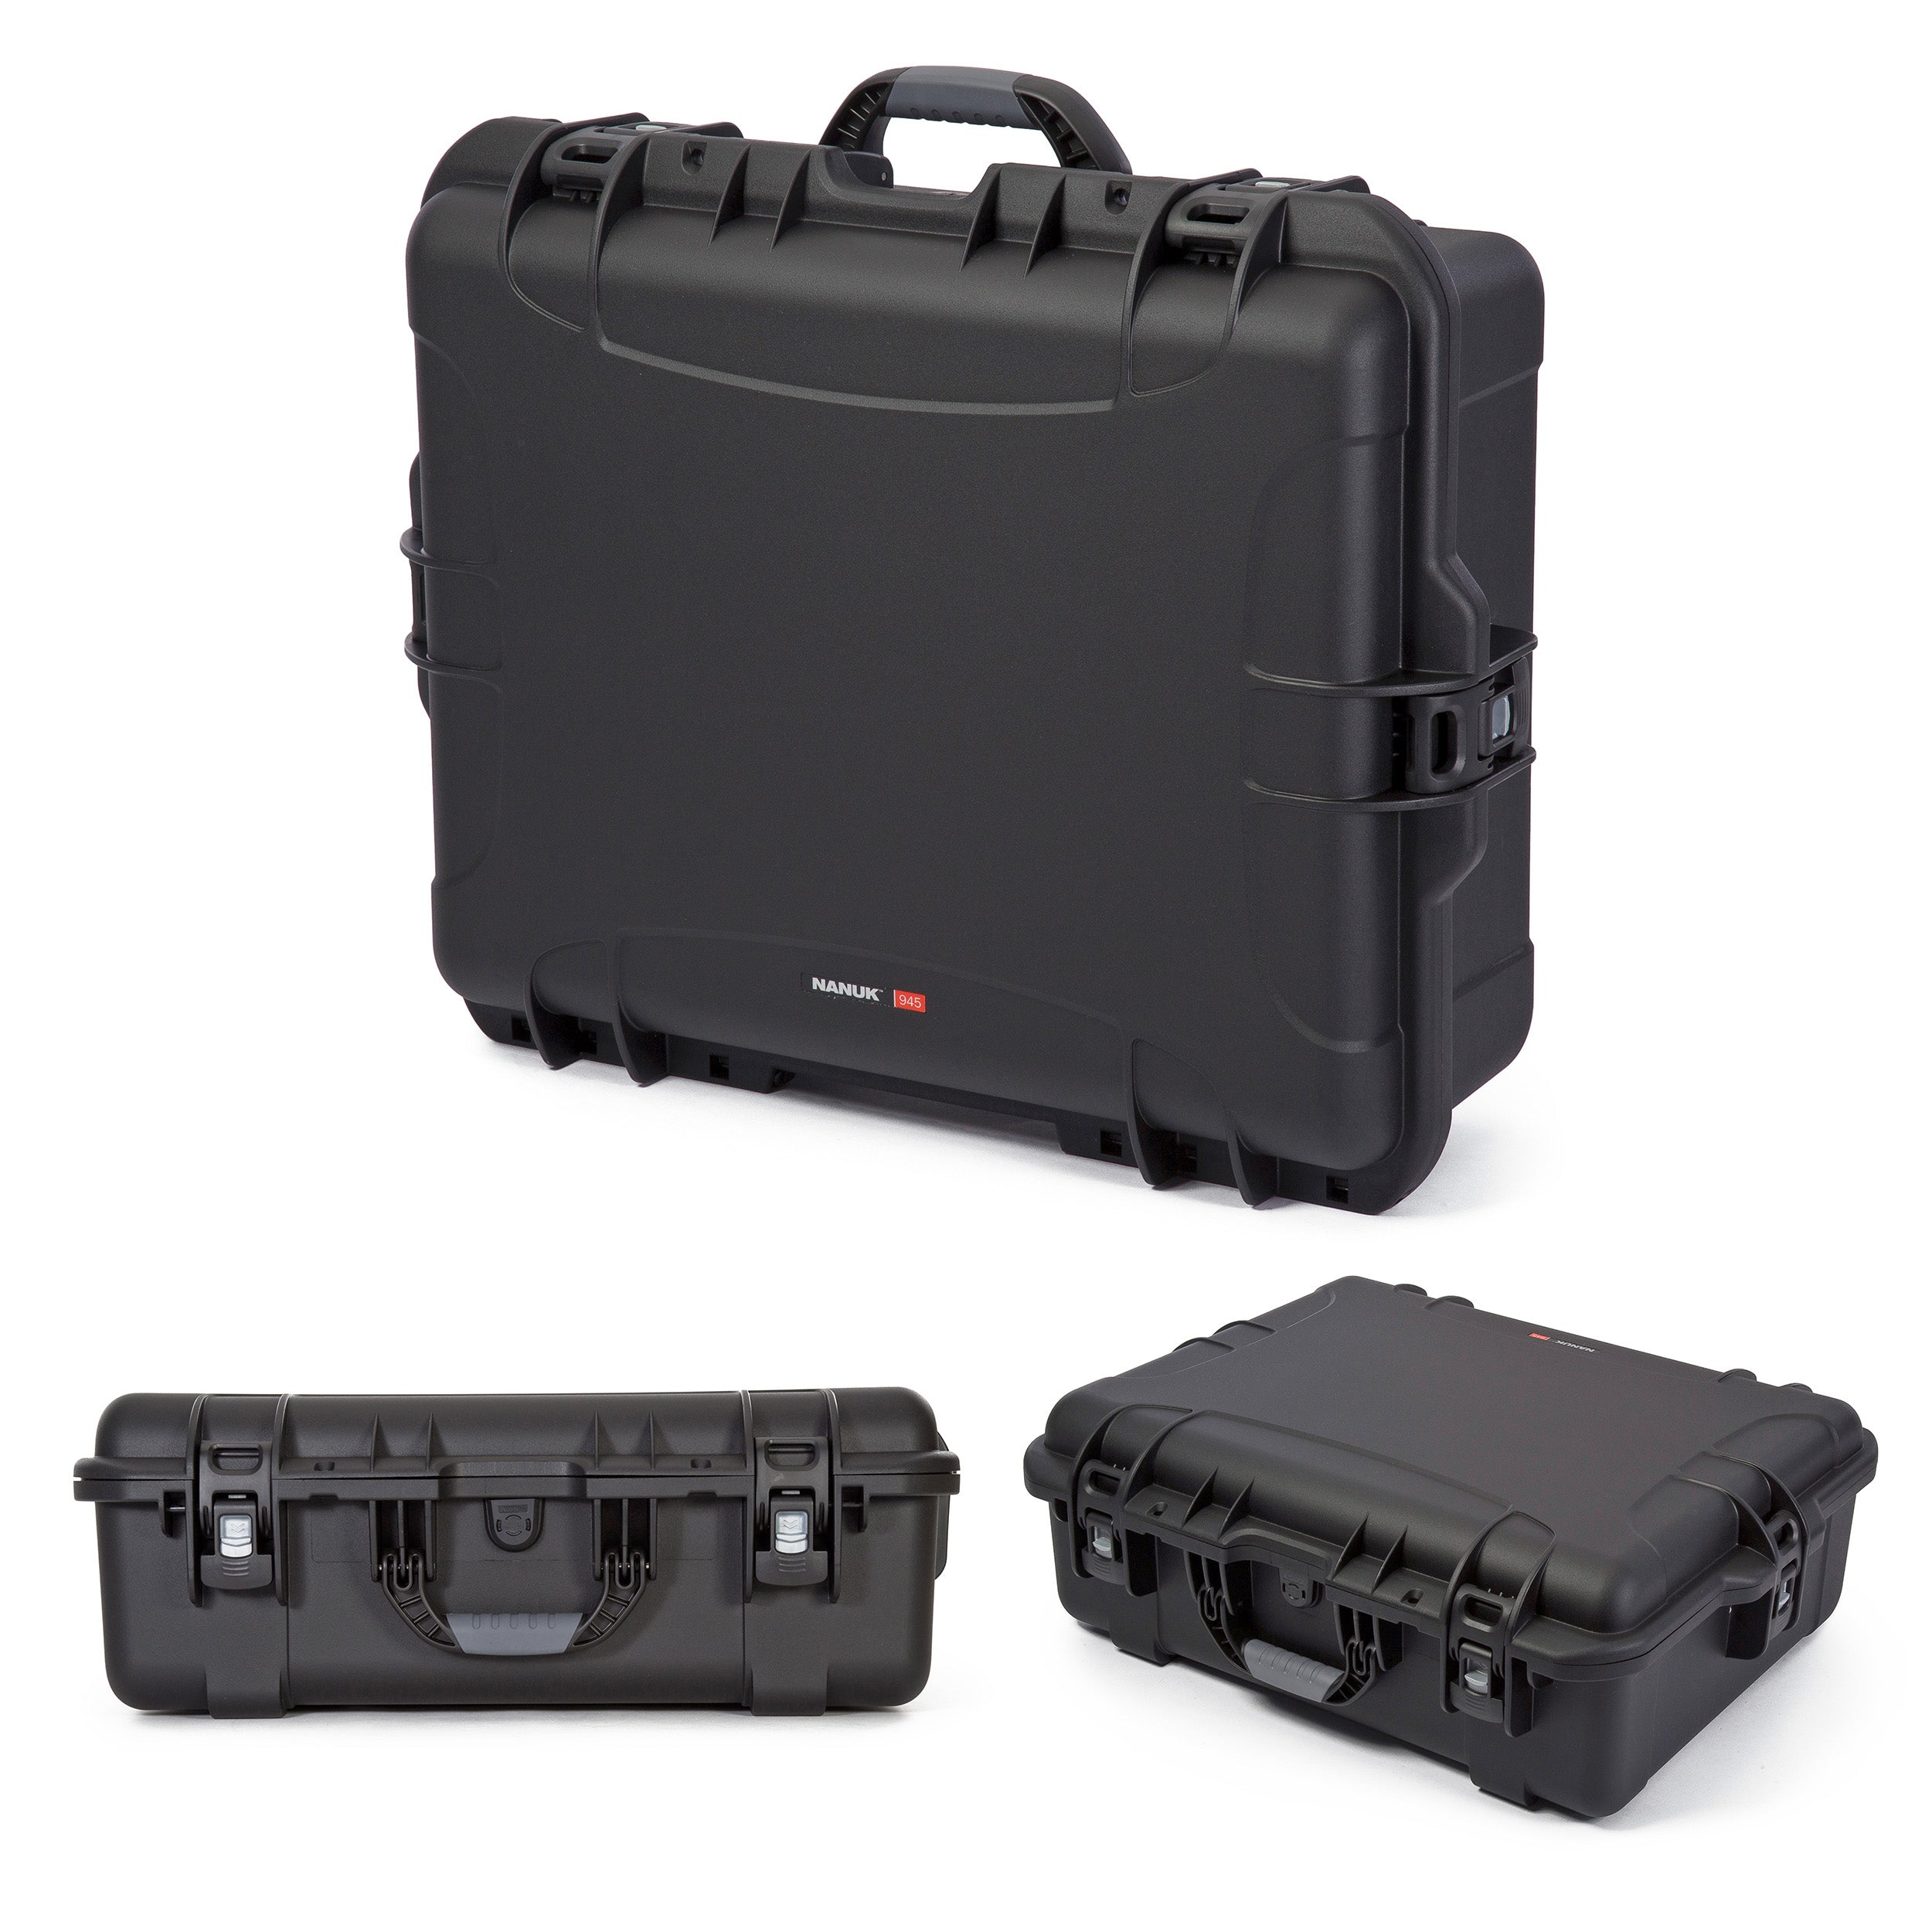 Nanuk 945-DJI41 Waterproof Hard Drone Case with Custom Foam Insert for DJI Phantom 4/ Phantom 4 Pro (Pro+) / Advanced (Advanced+) & Phantom 3 - Black